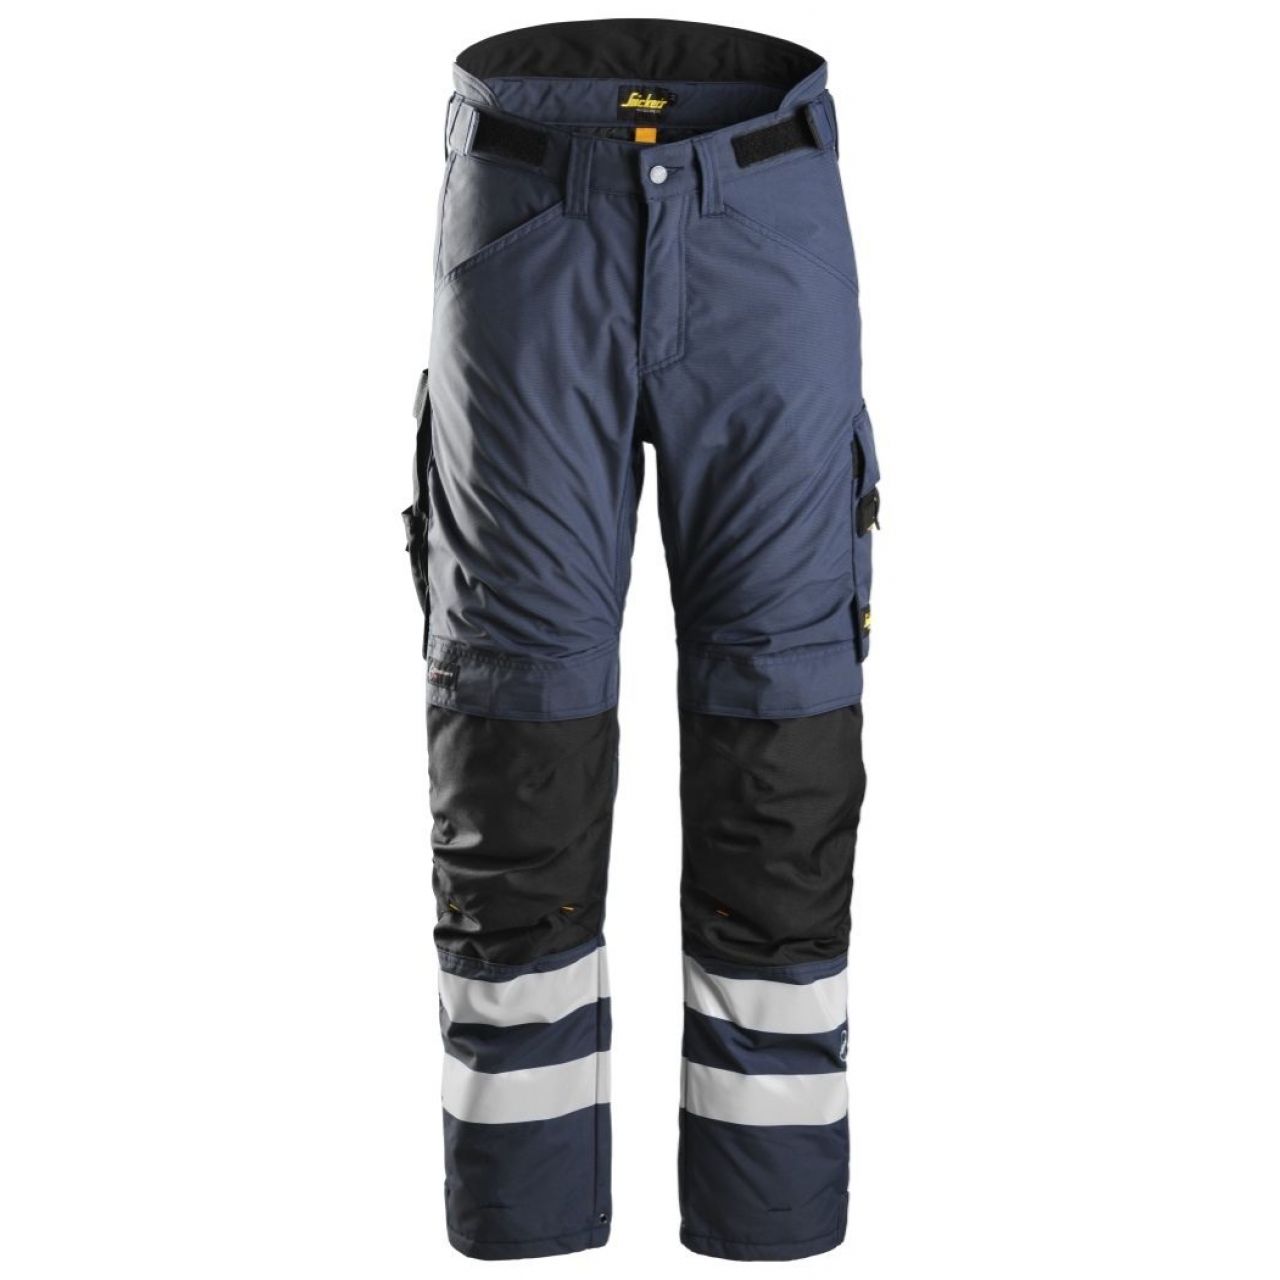 Pantalon aislante AllroundWork 37.5® azul marino-negro talla XL largo